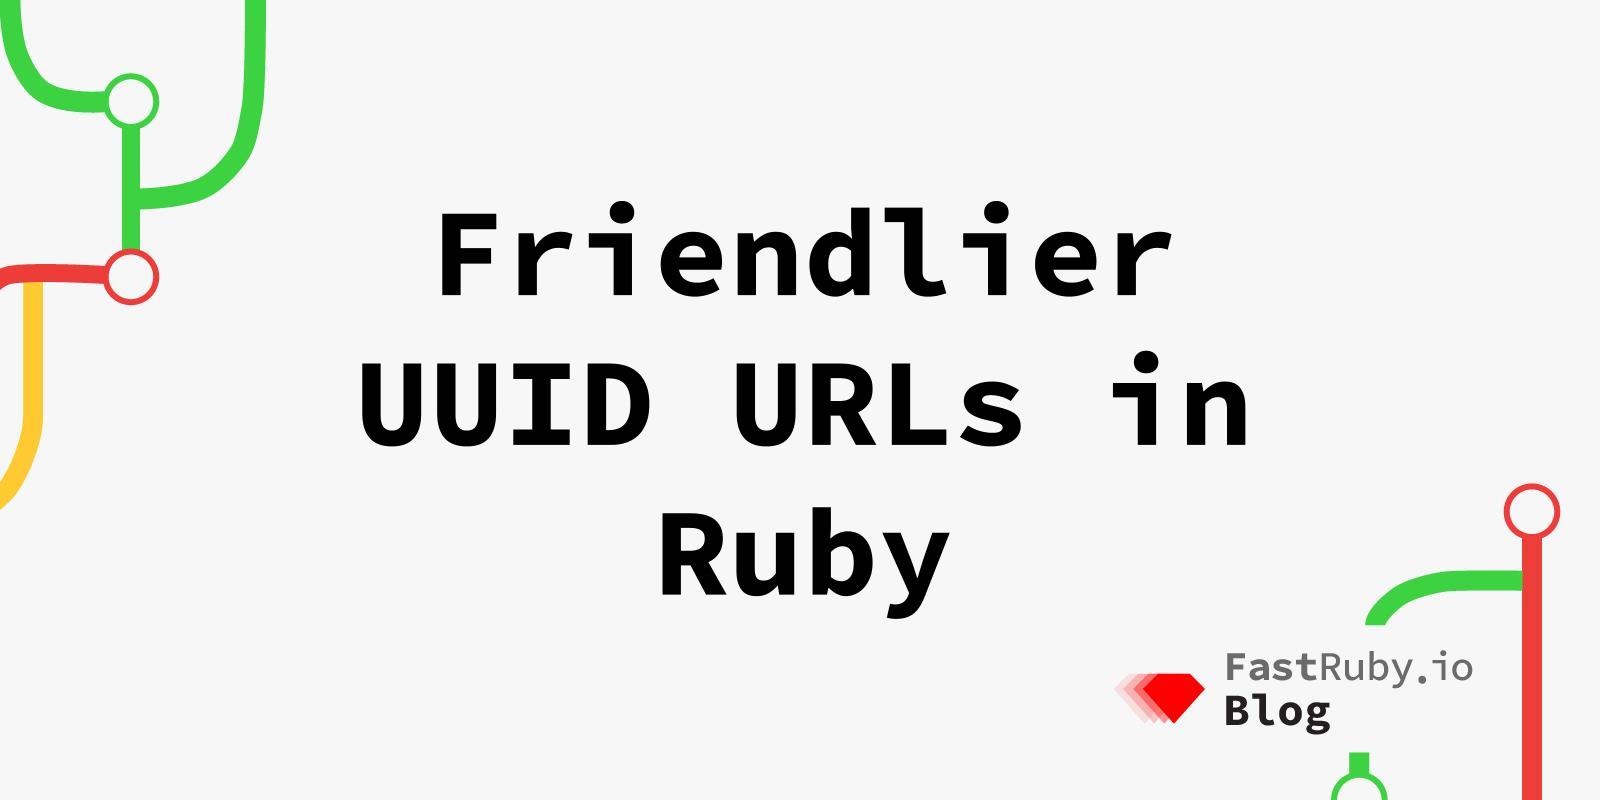 Friendlier UUID URLs in Ruby